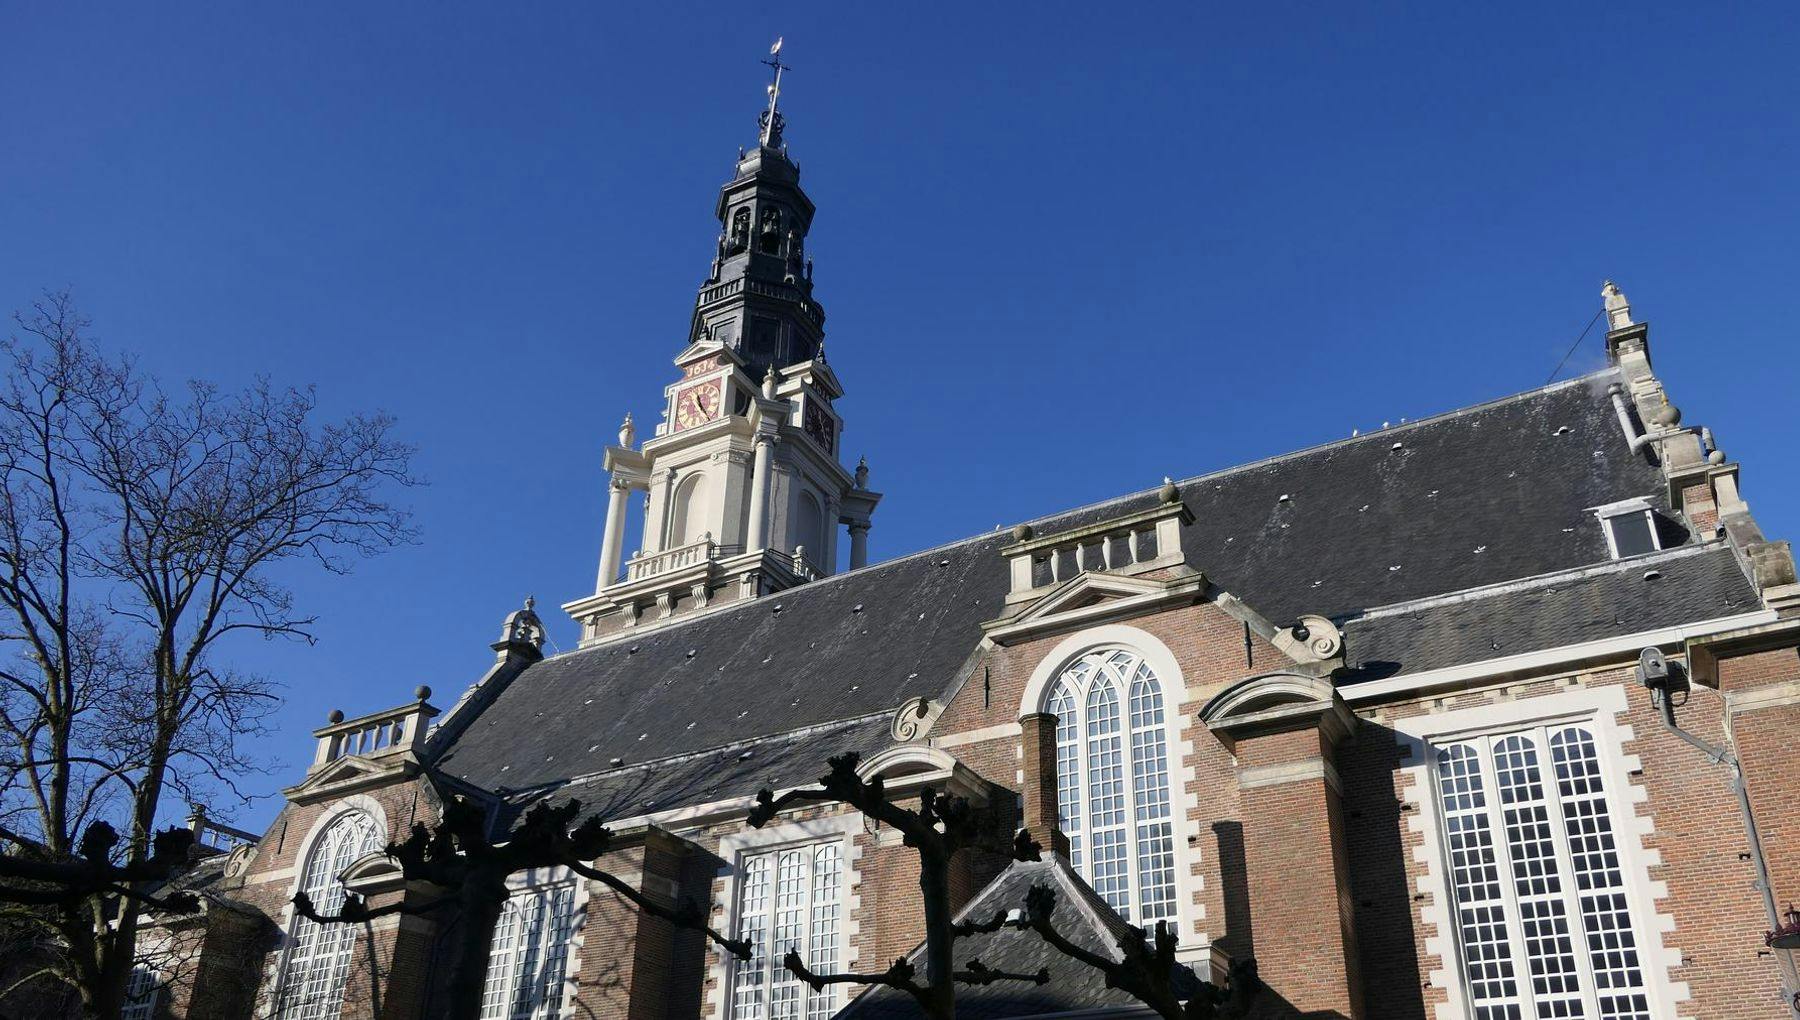 Exterior of Zuiderkerk church